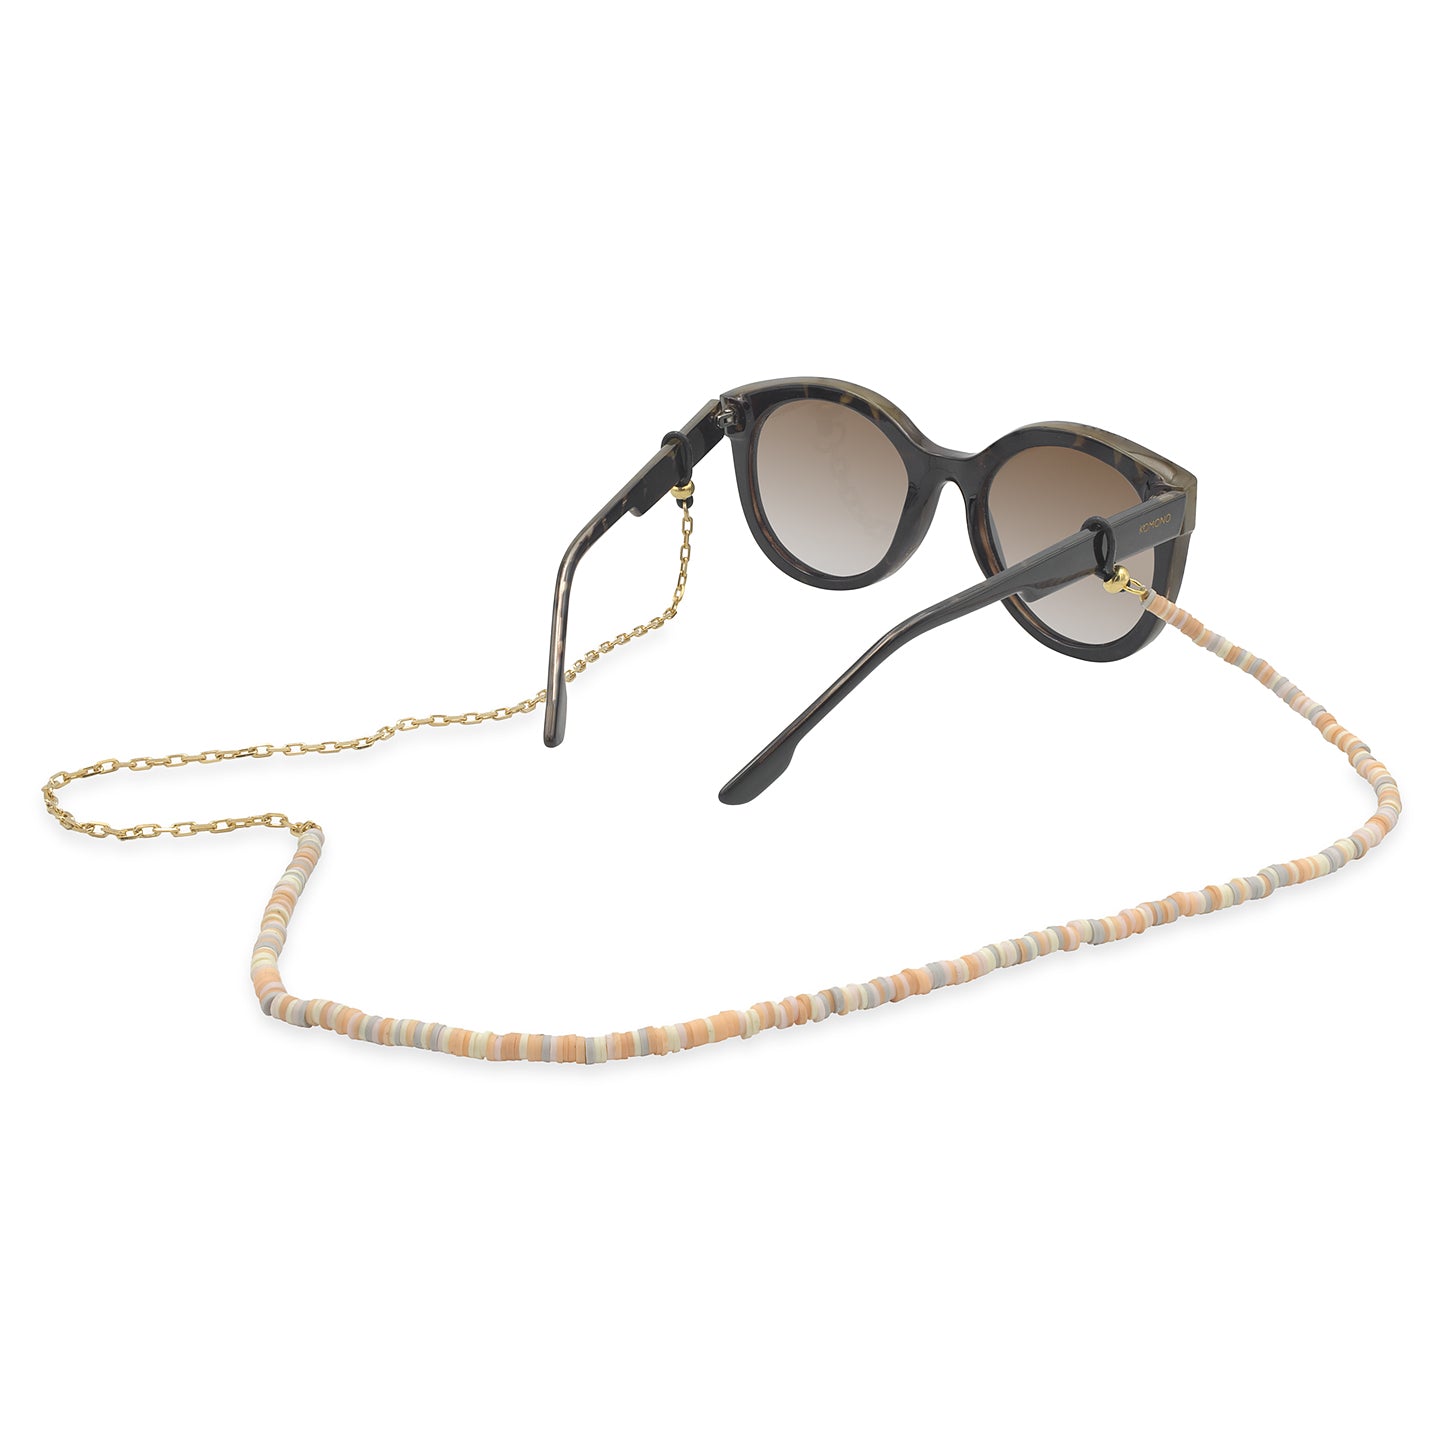 Lant ochelari argint Nude Shades - placat aur galben 18K